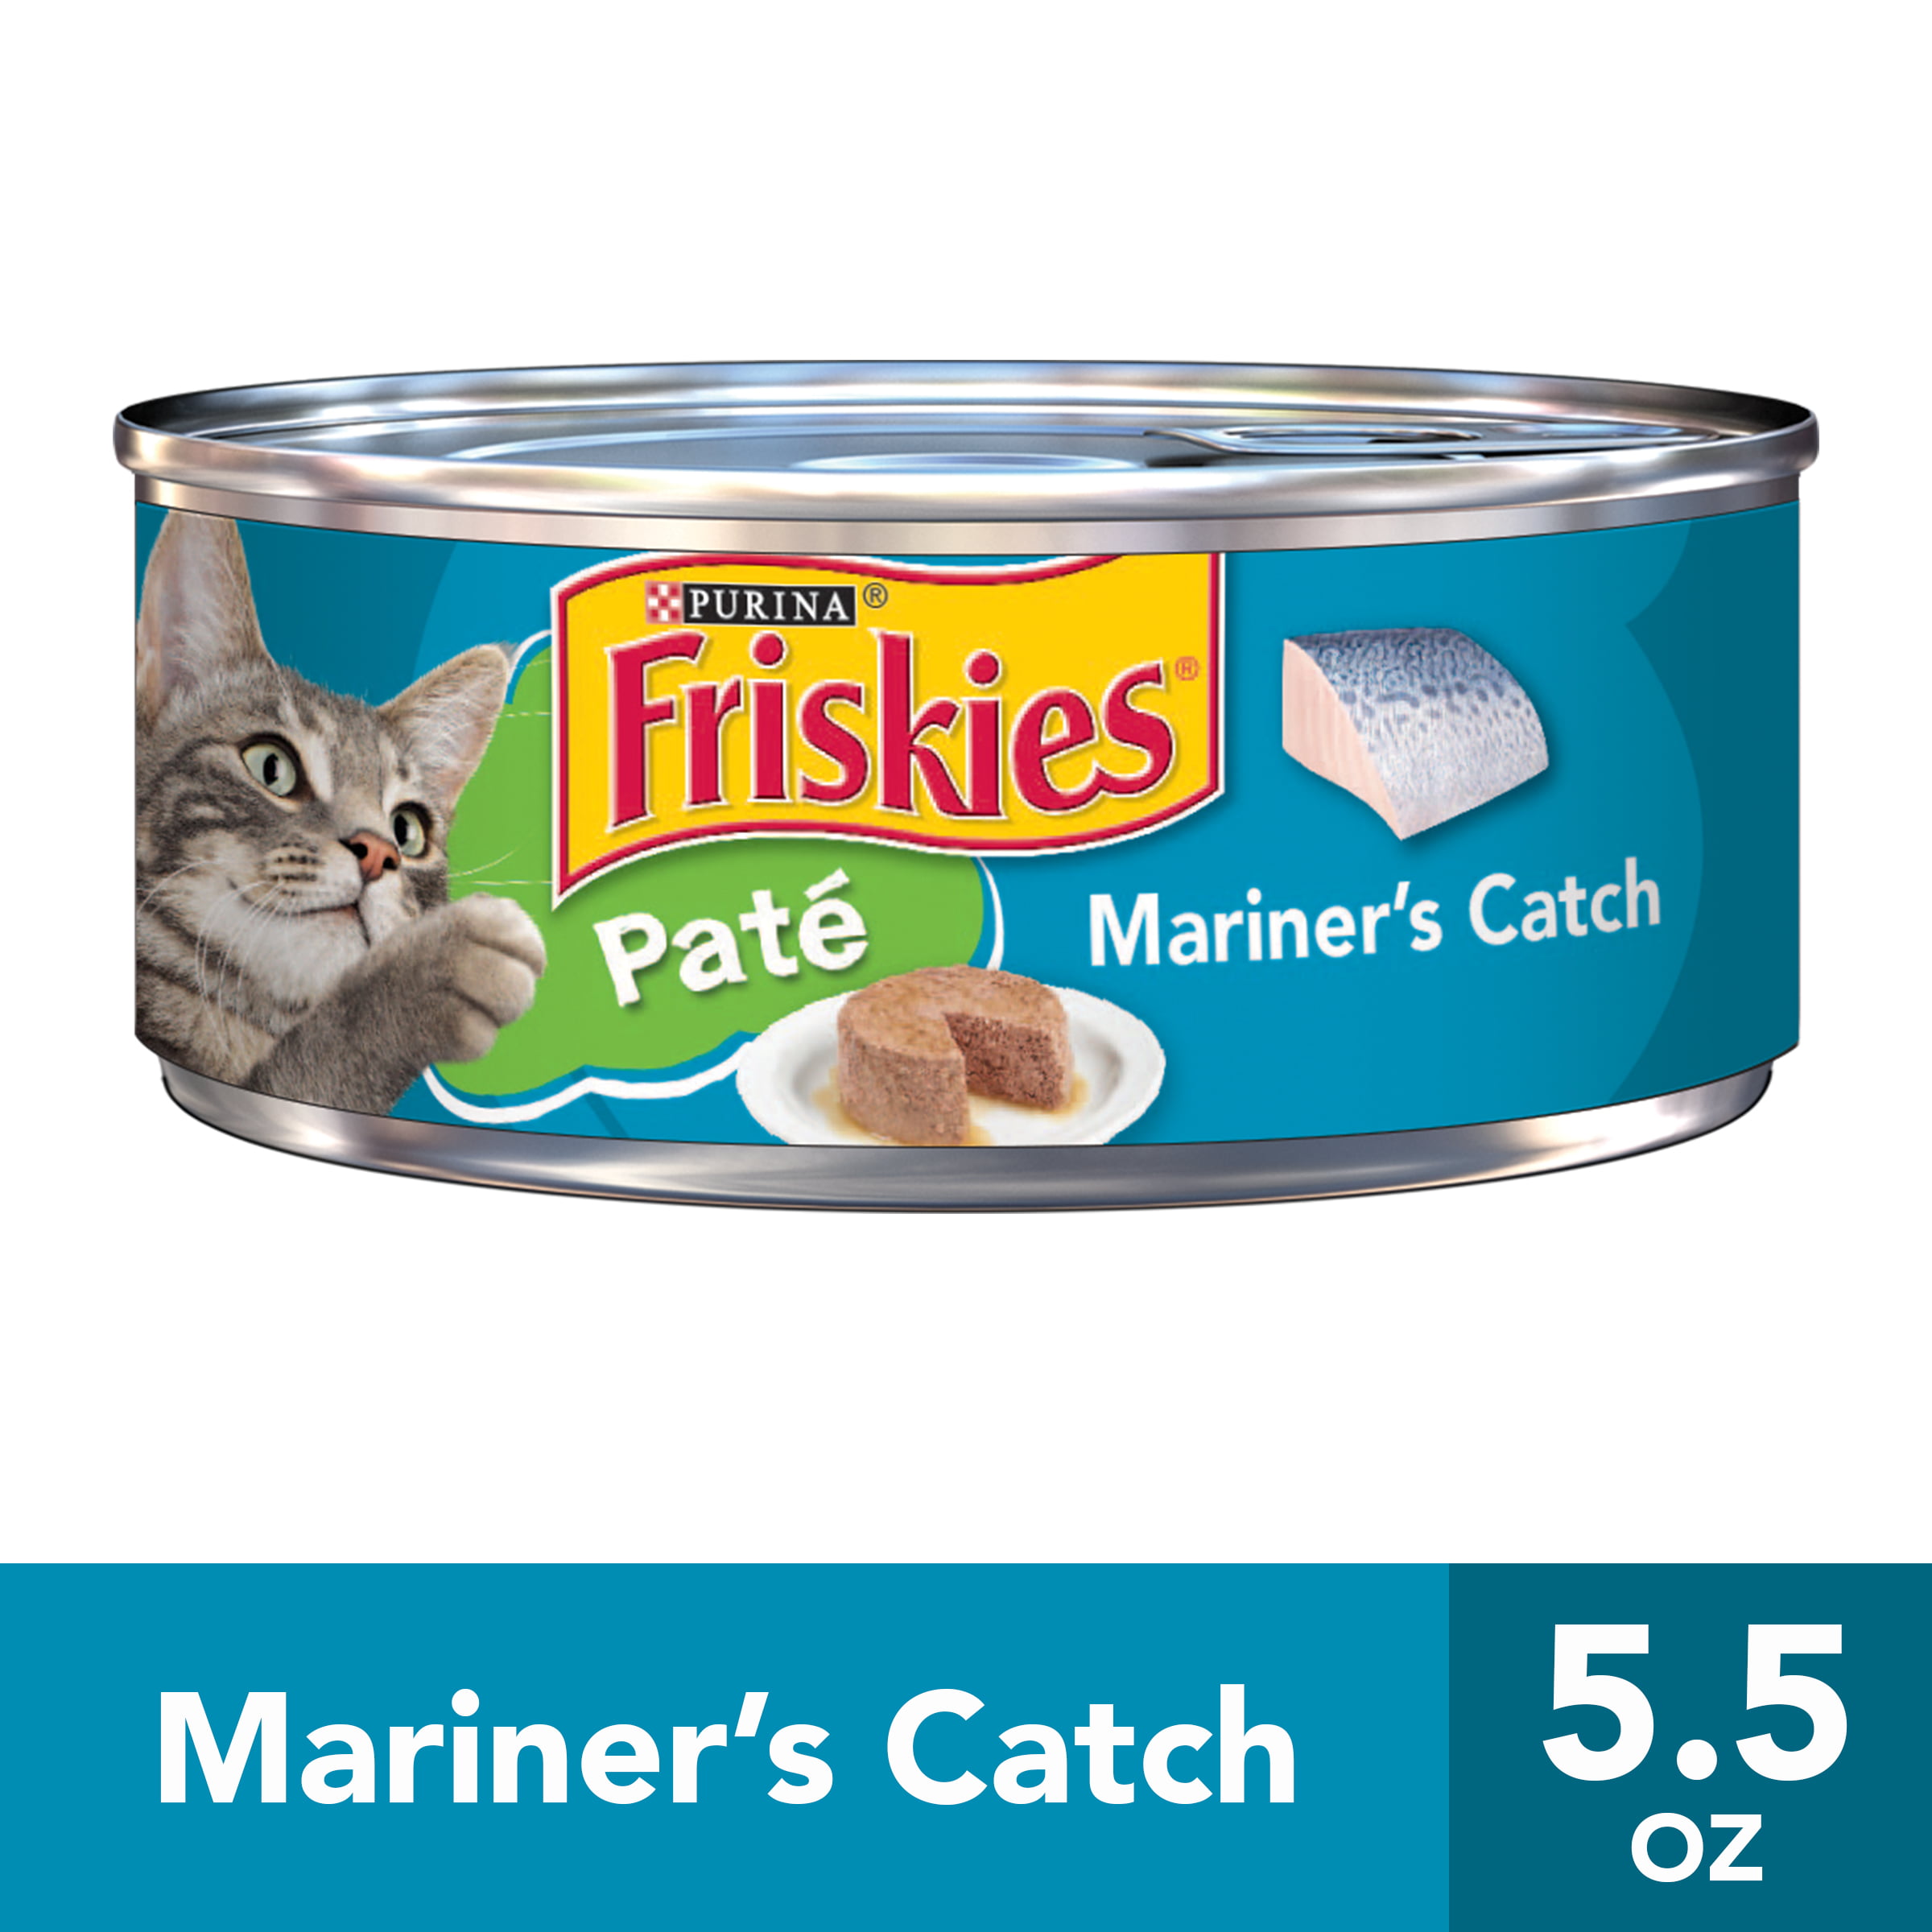 (24 Pack) Friskies Pate Wet Cat Food, Tasty Treasures With Chicken